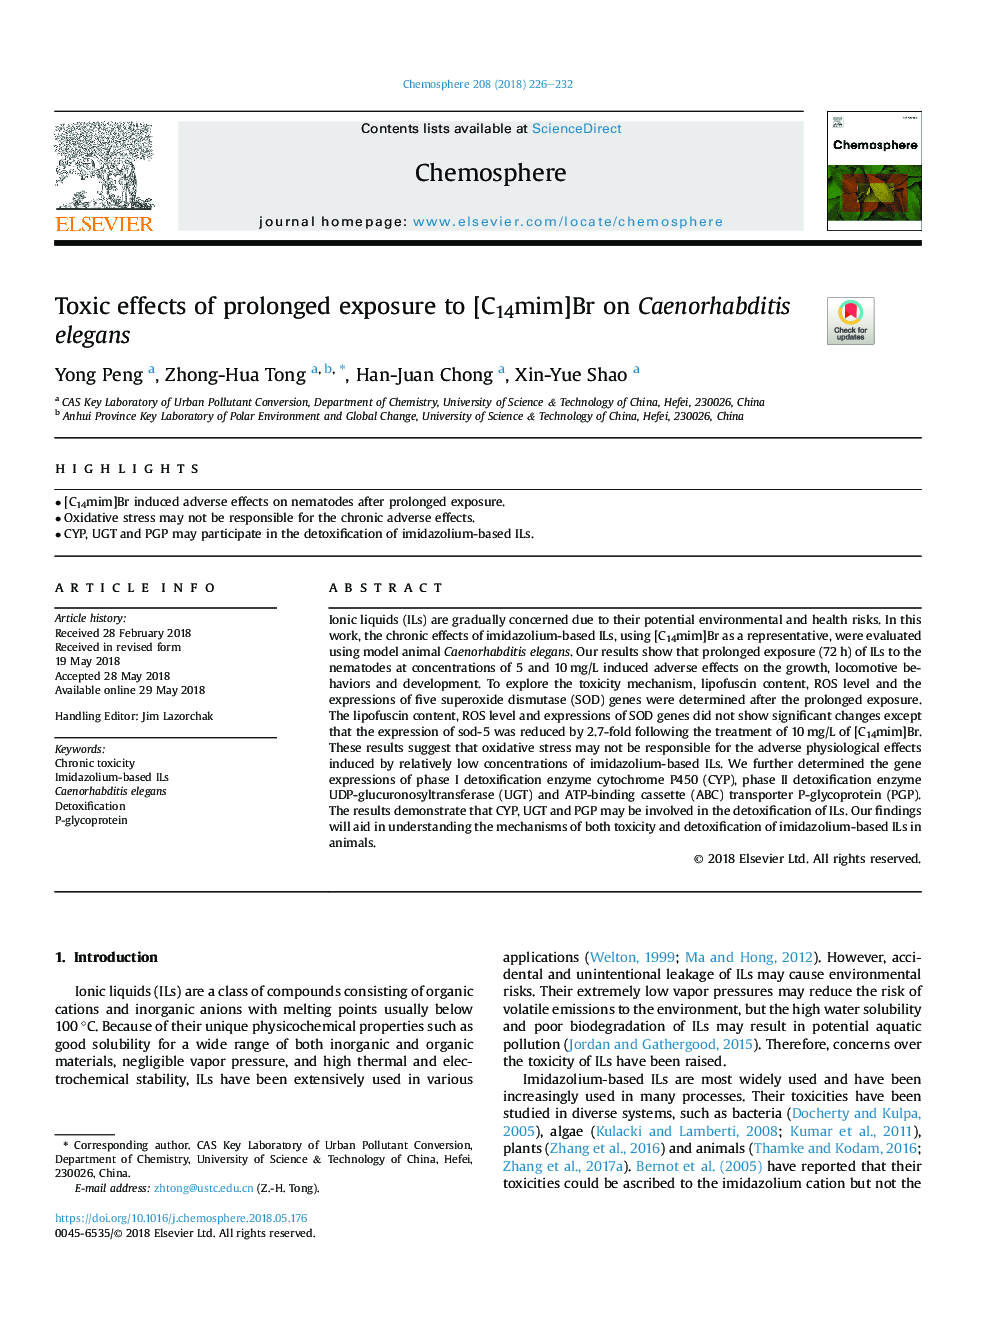 Toxic effects of prolonged exposure to [C14mim]Br on Caenorhabditis elegans